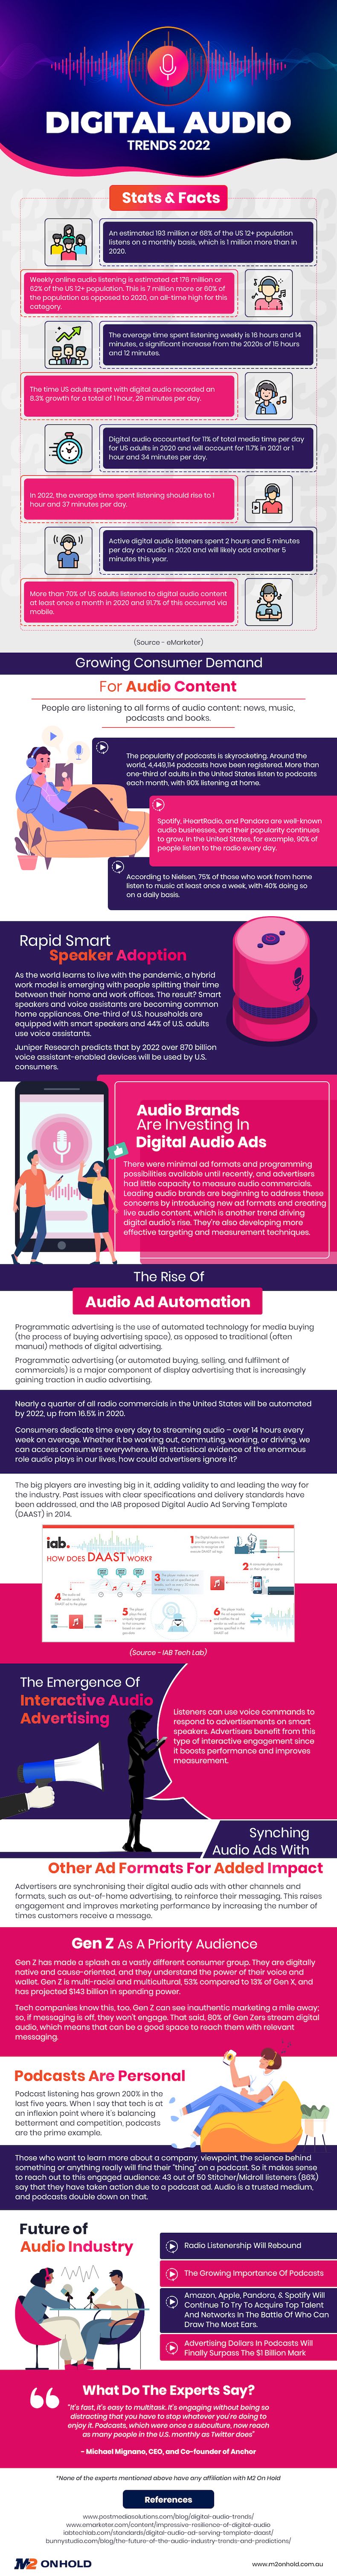 Digital audio trends 2022 infographic